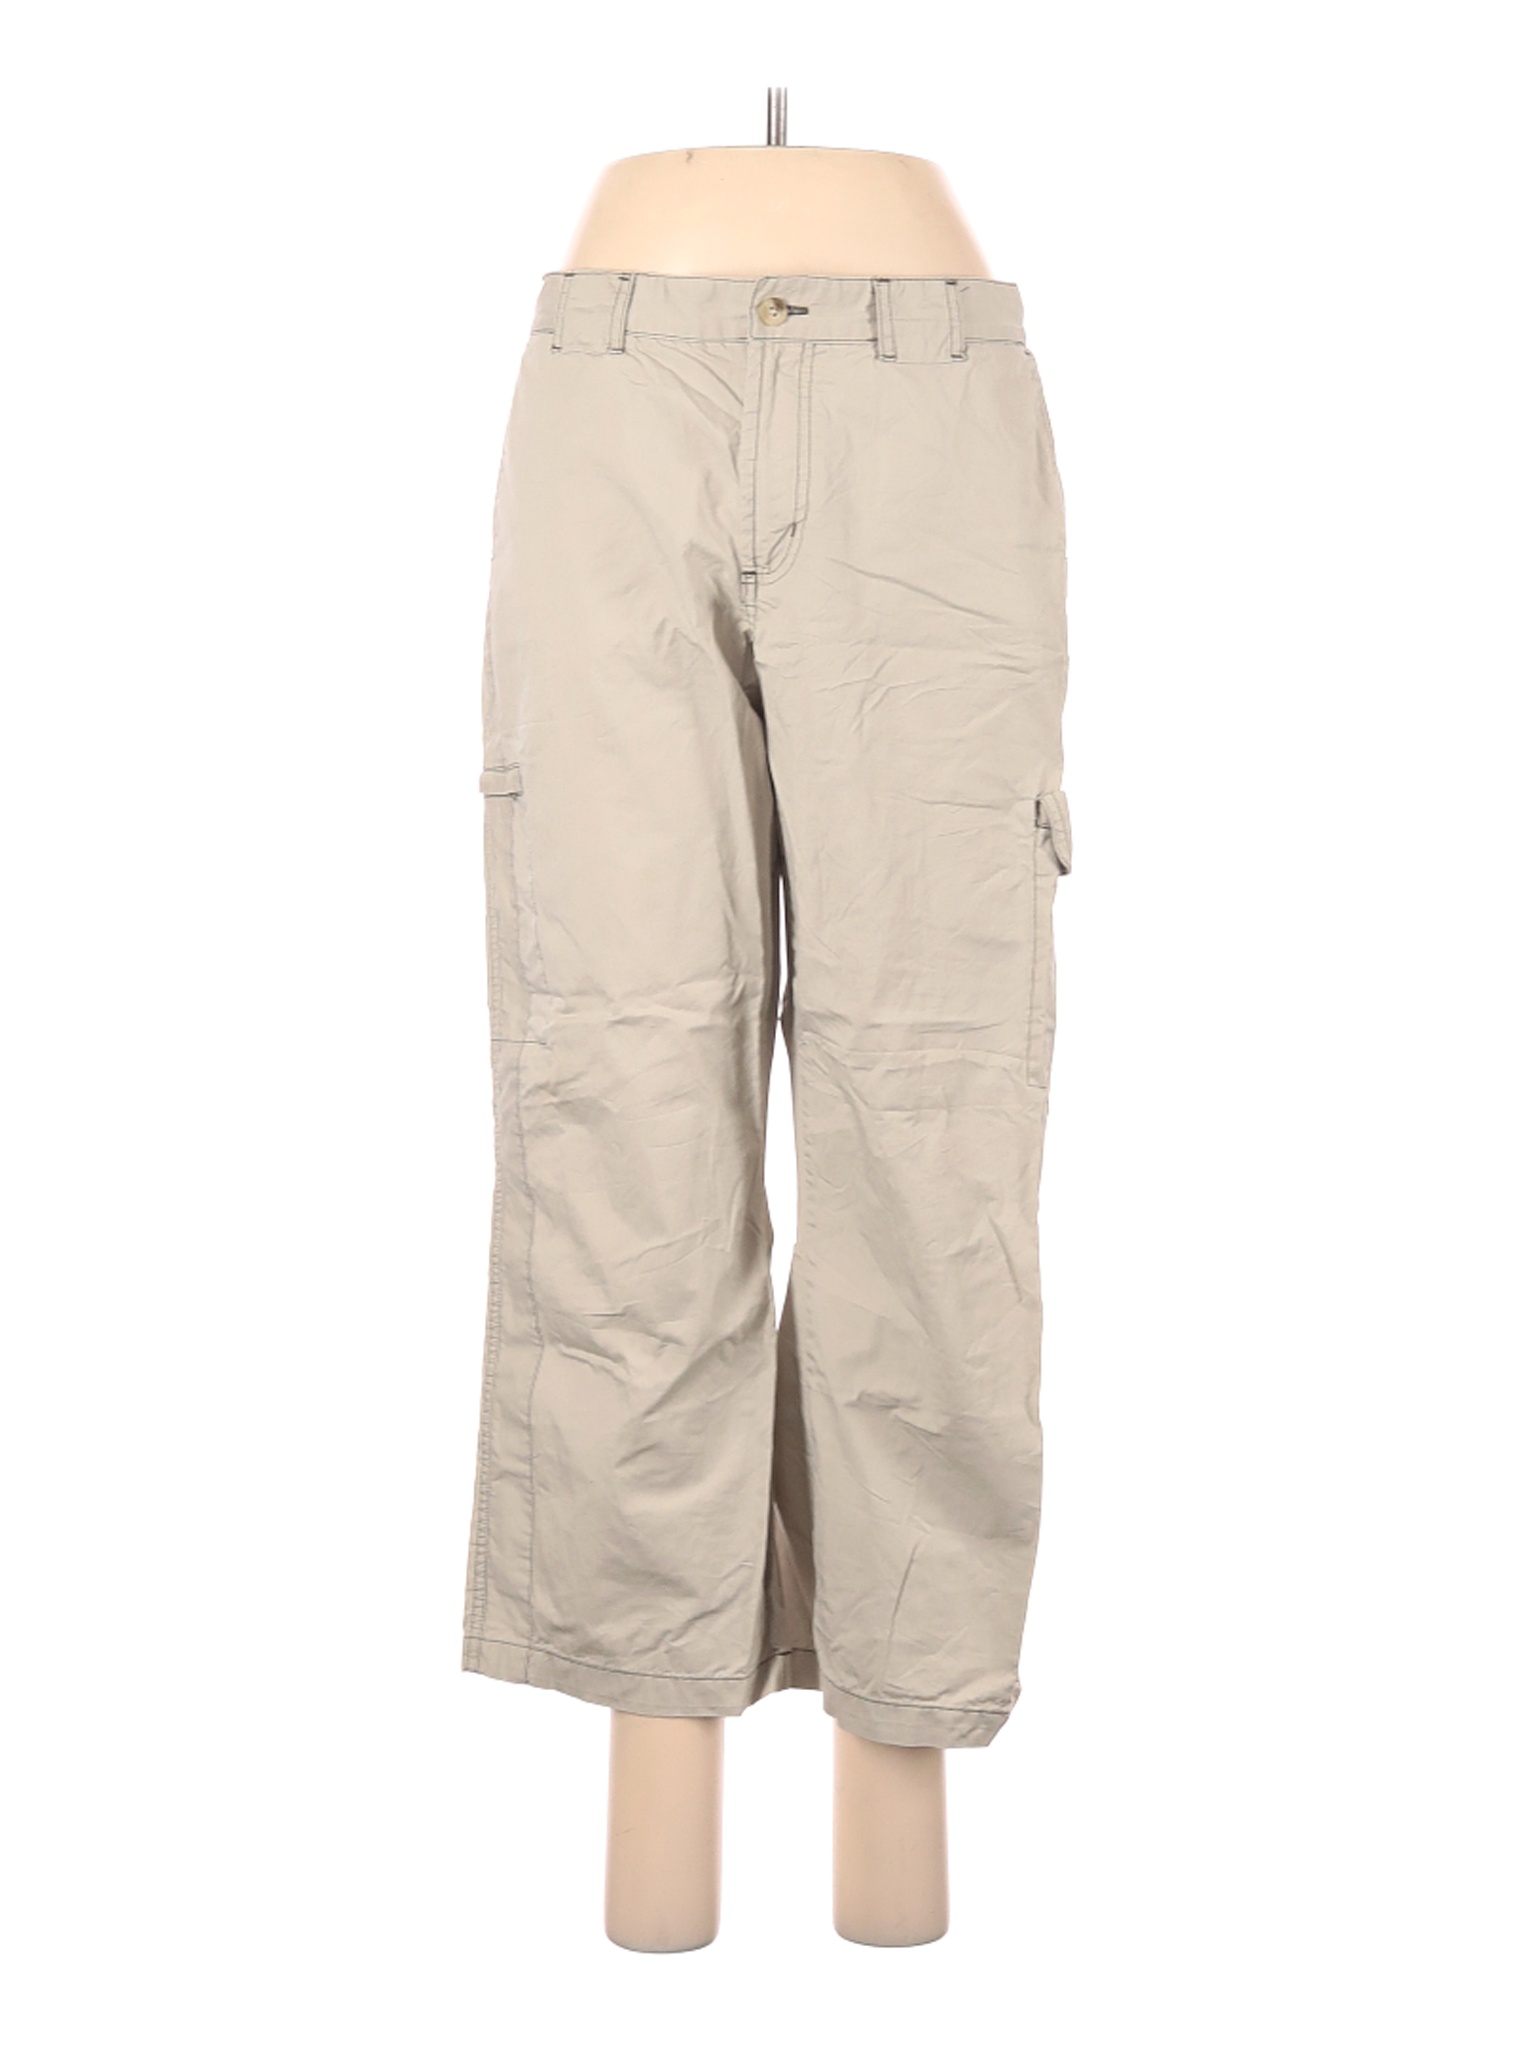 Columbia Women Brown Cargo Pants 8 | eBay